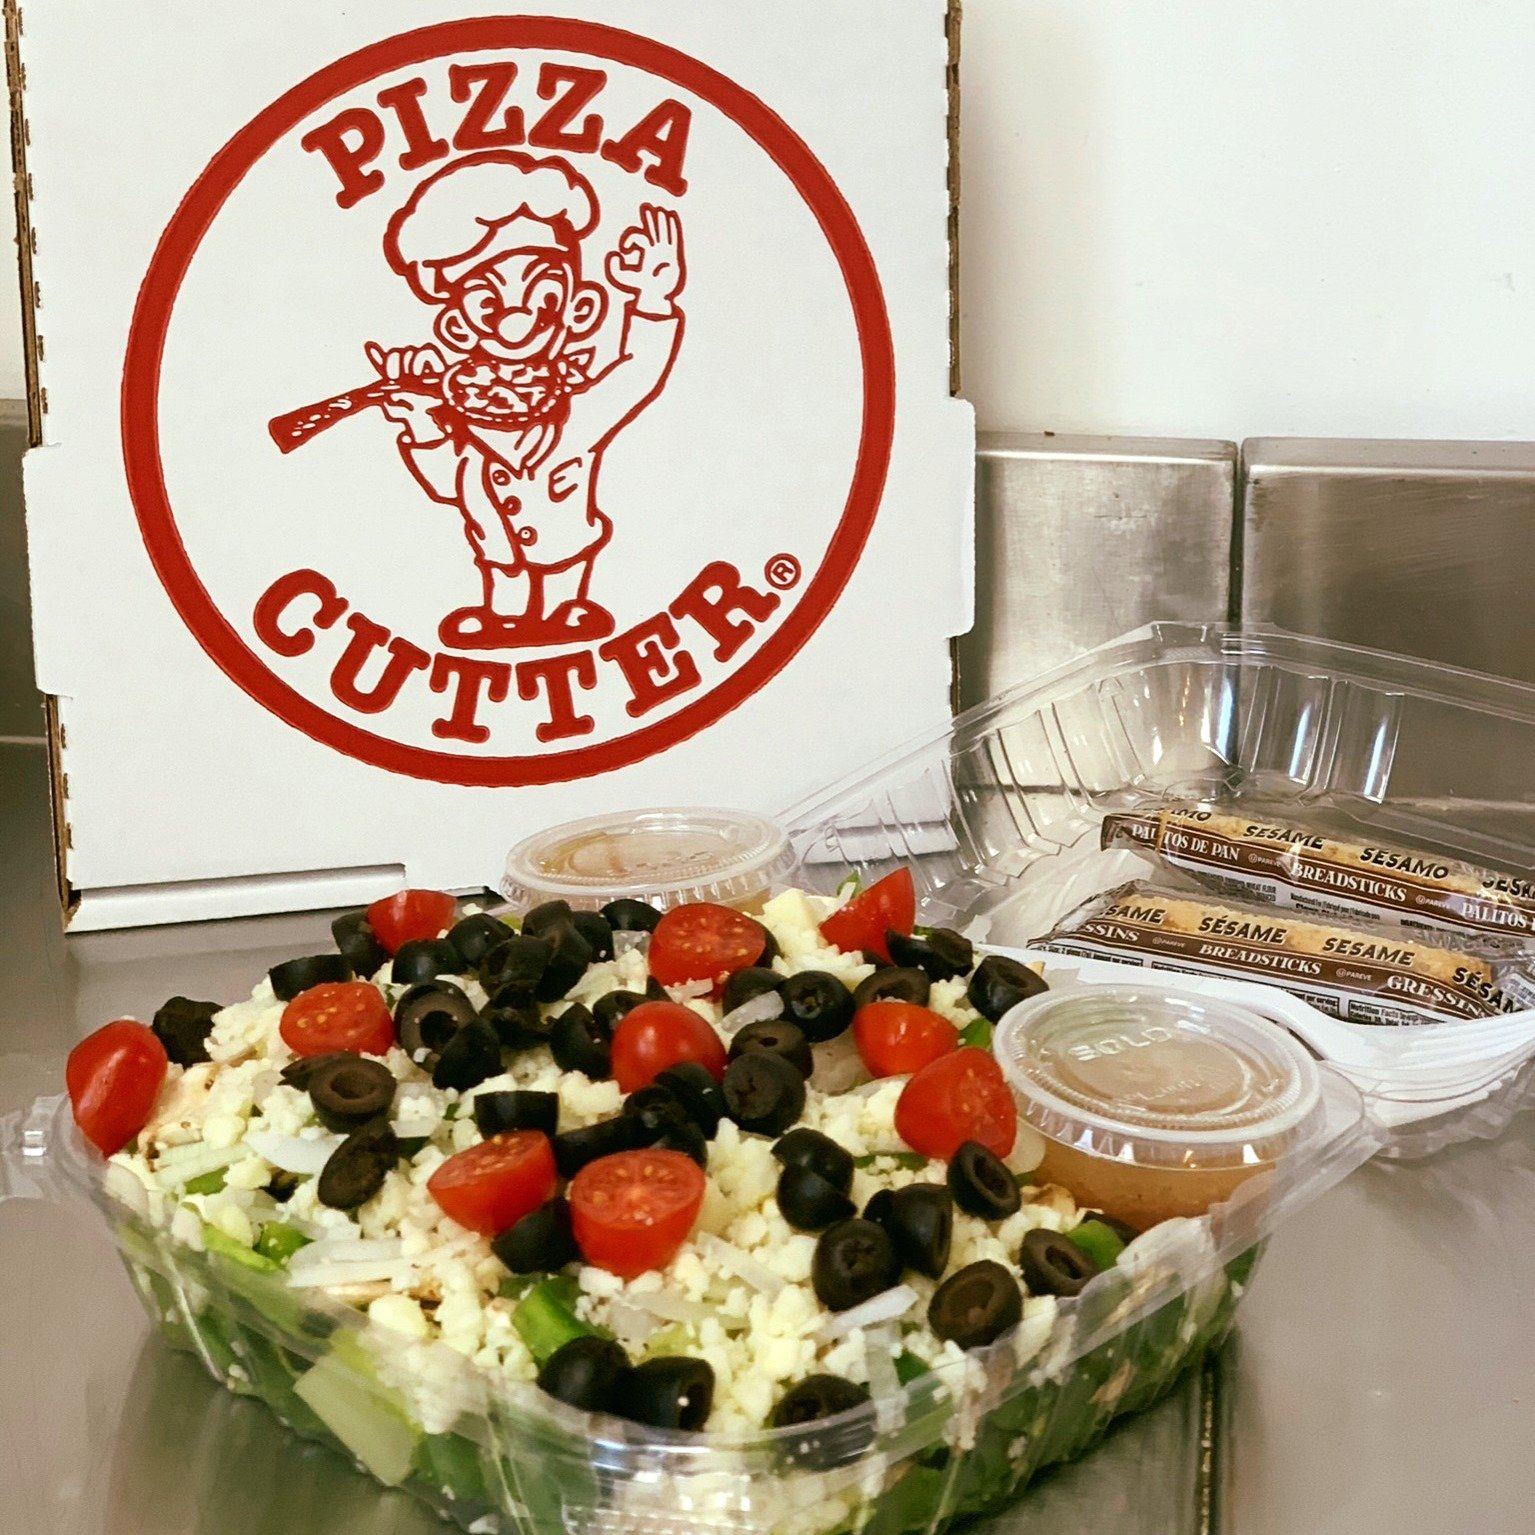 Antipasto Salad for lunch, anyone? ❤️🥗

#northvillemichigan #pizza #northvillemi #puremichigan #supportsmallbusiness #eatlocal #supportlocalbusiness #locallunch